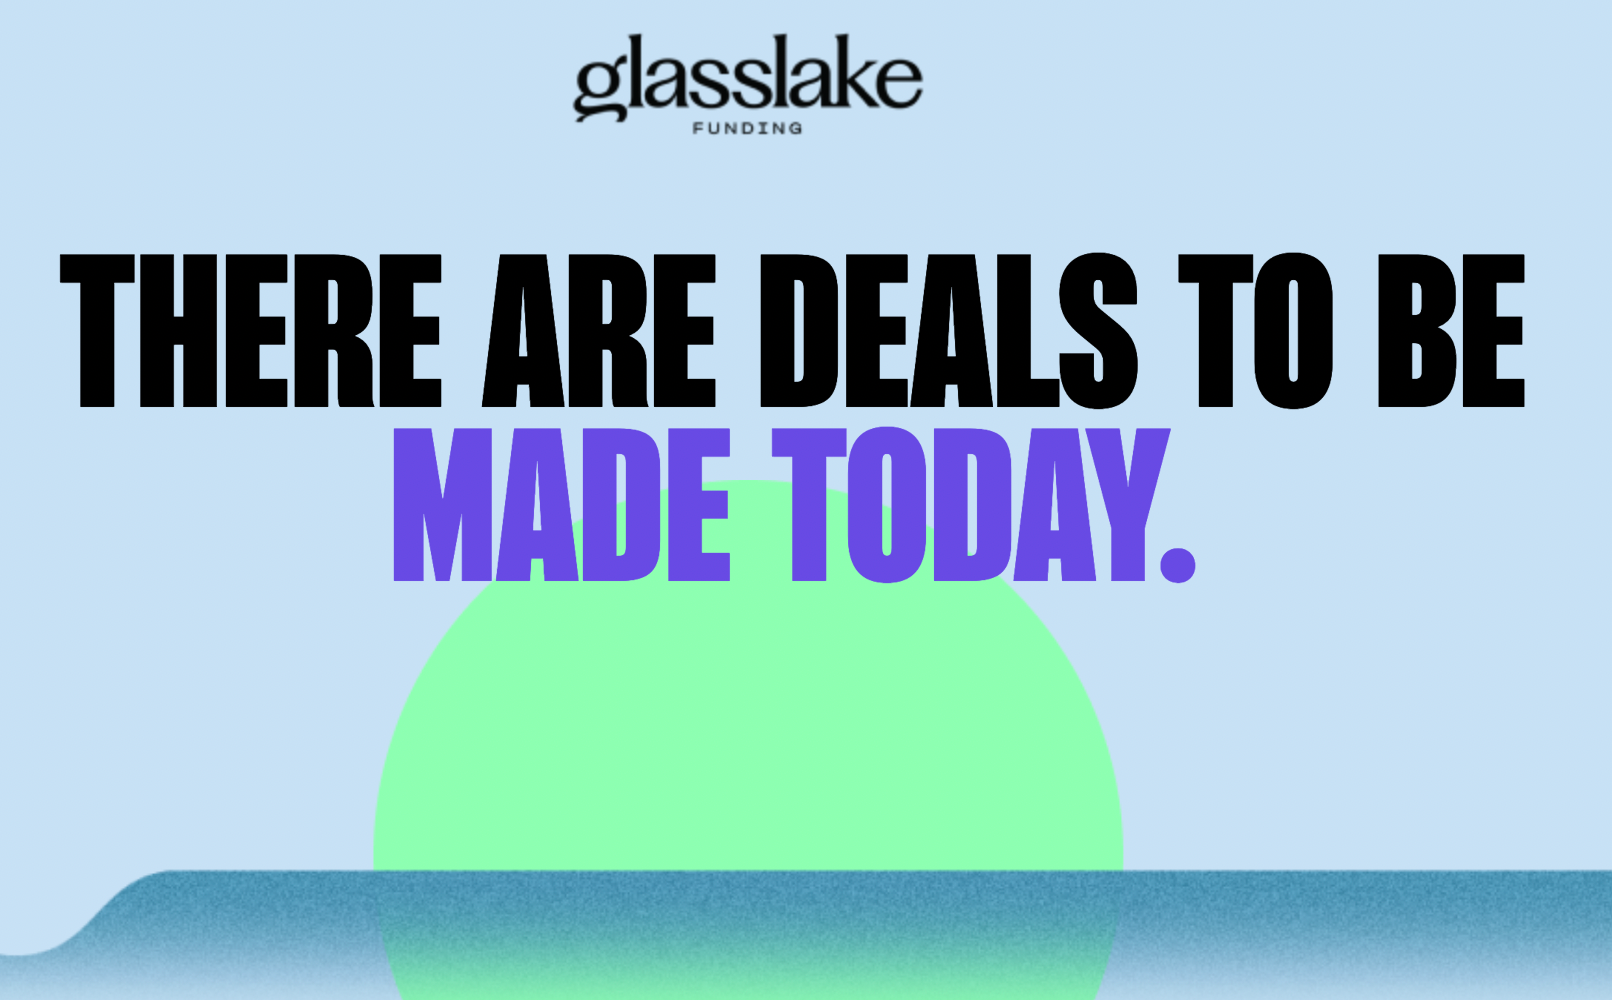 Glasslake brings unregulated U.S.-style financing to Canada